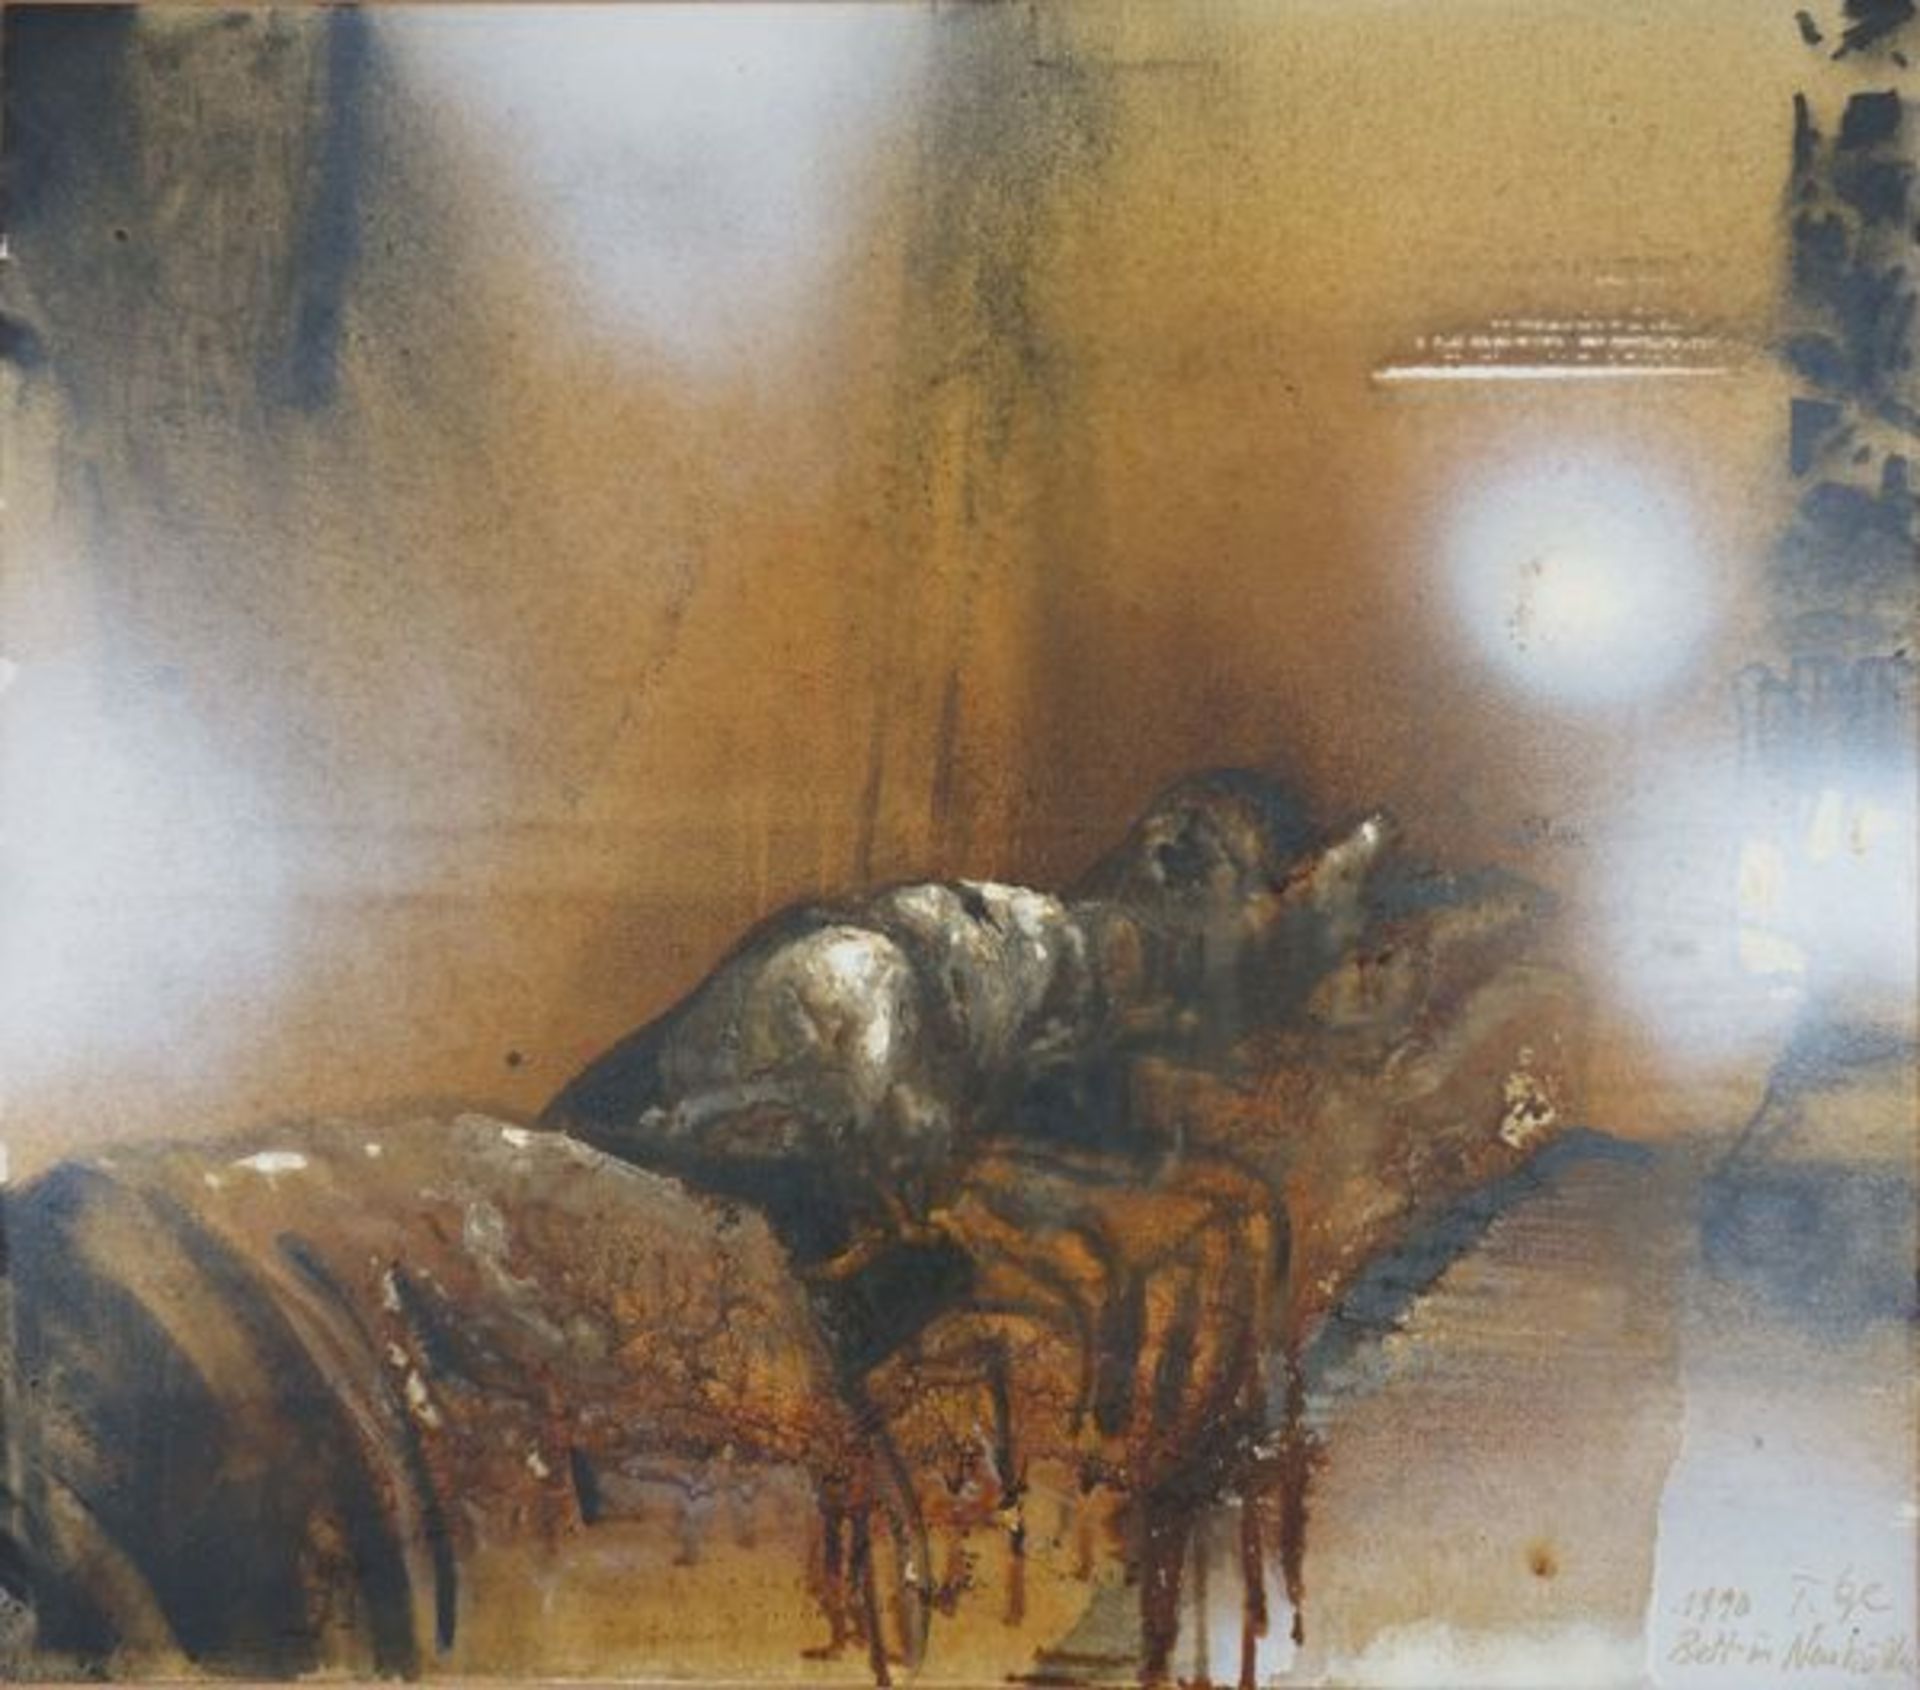 Lange, Thomas Öl auf Leinwand, 70 x 80 cm Bett in Neukölln (1990) Signiert, datiert und betitelt